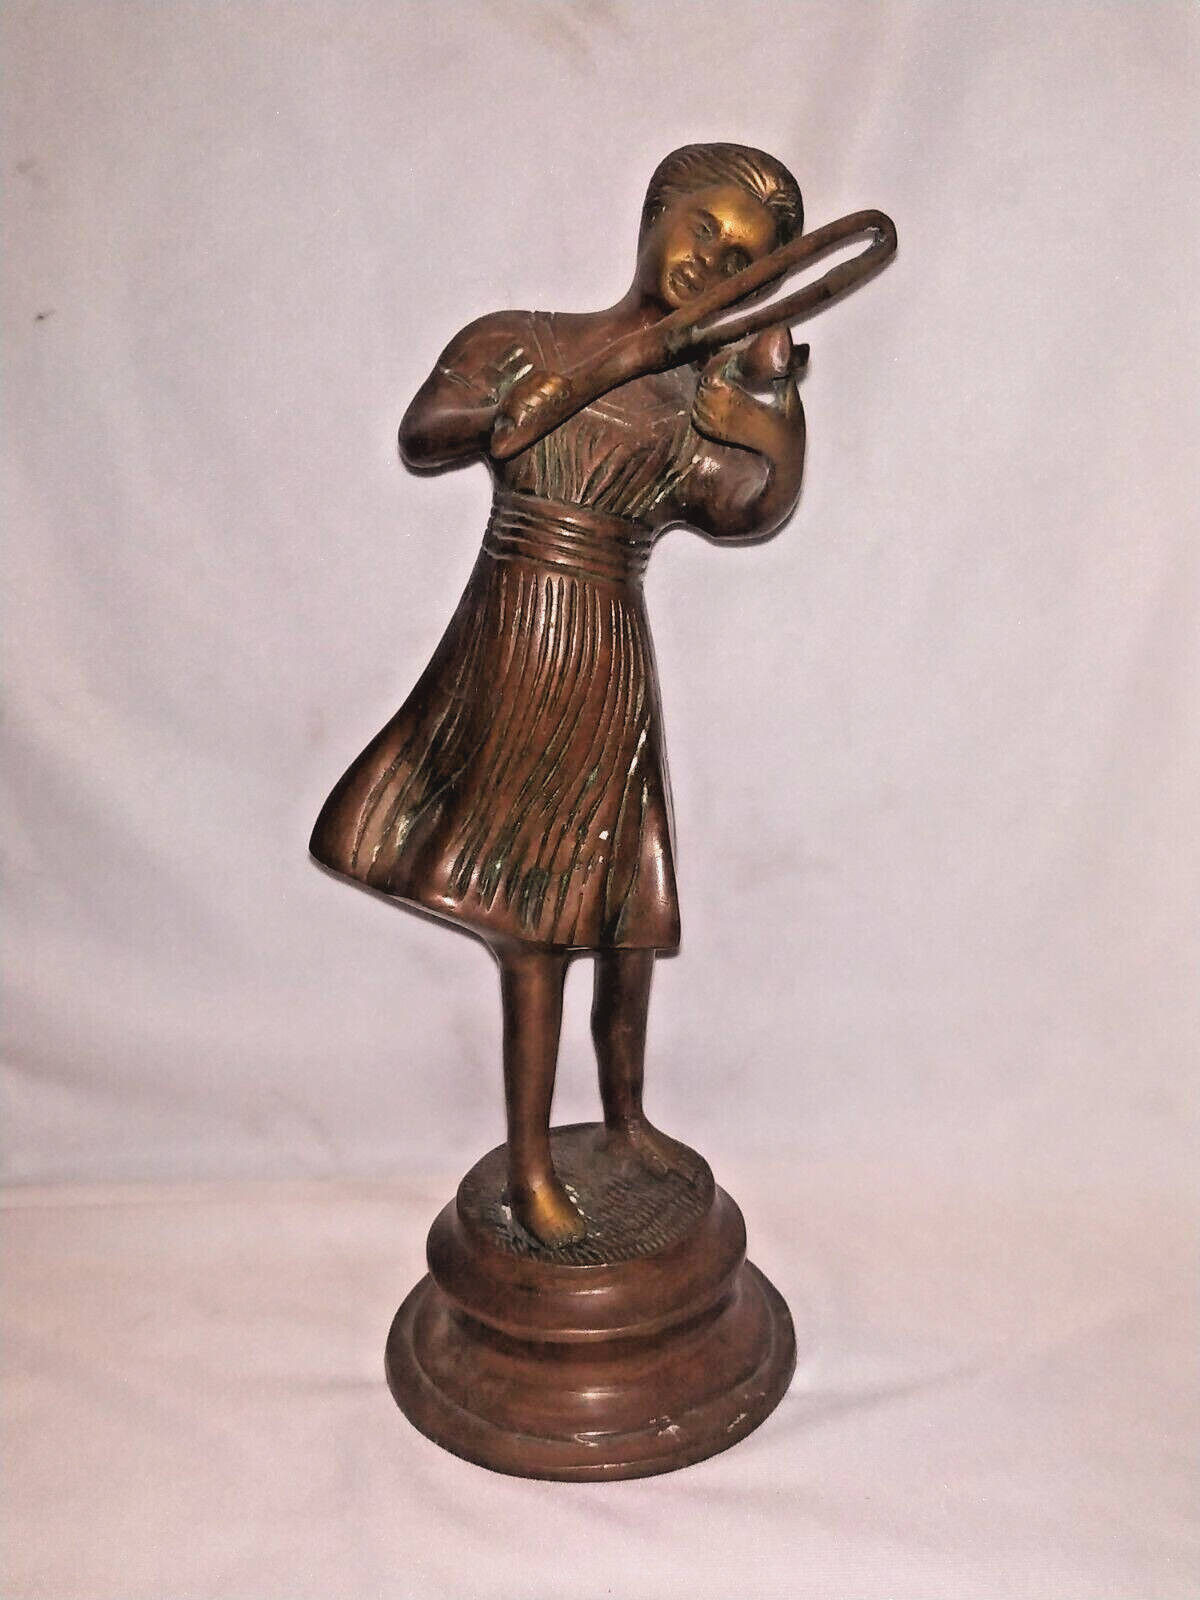 Vintage English Ethnic Bronze Figure Lady Playing Violin Music Instrument Dacor